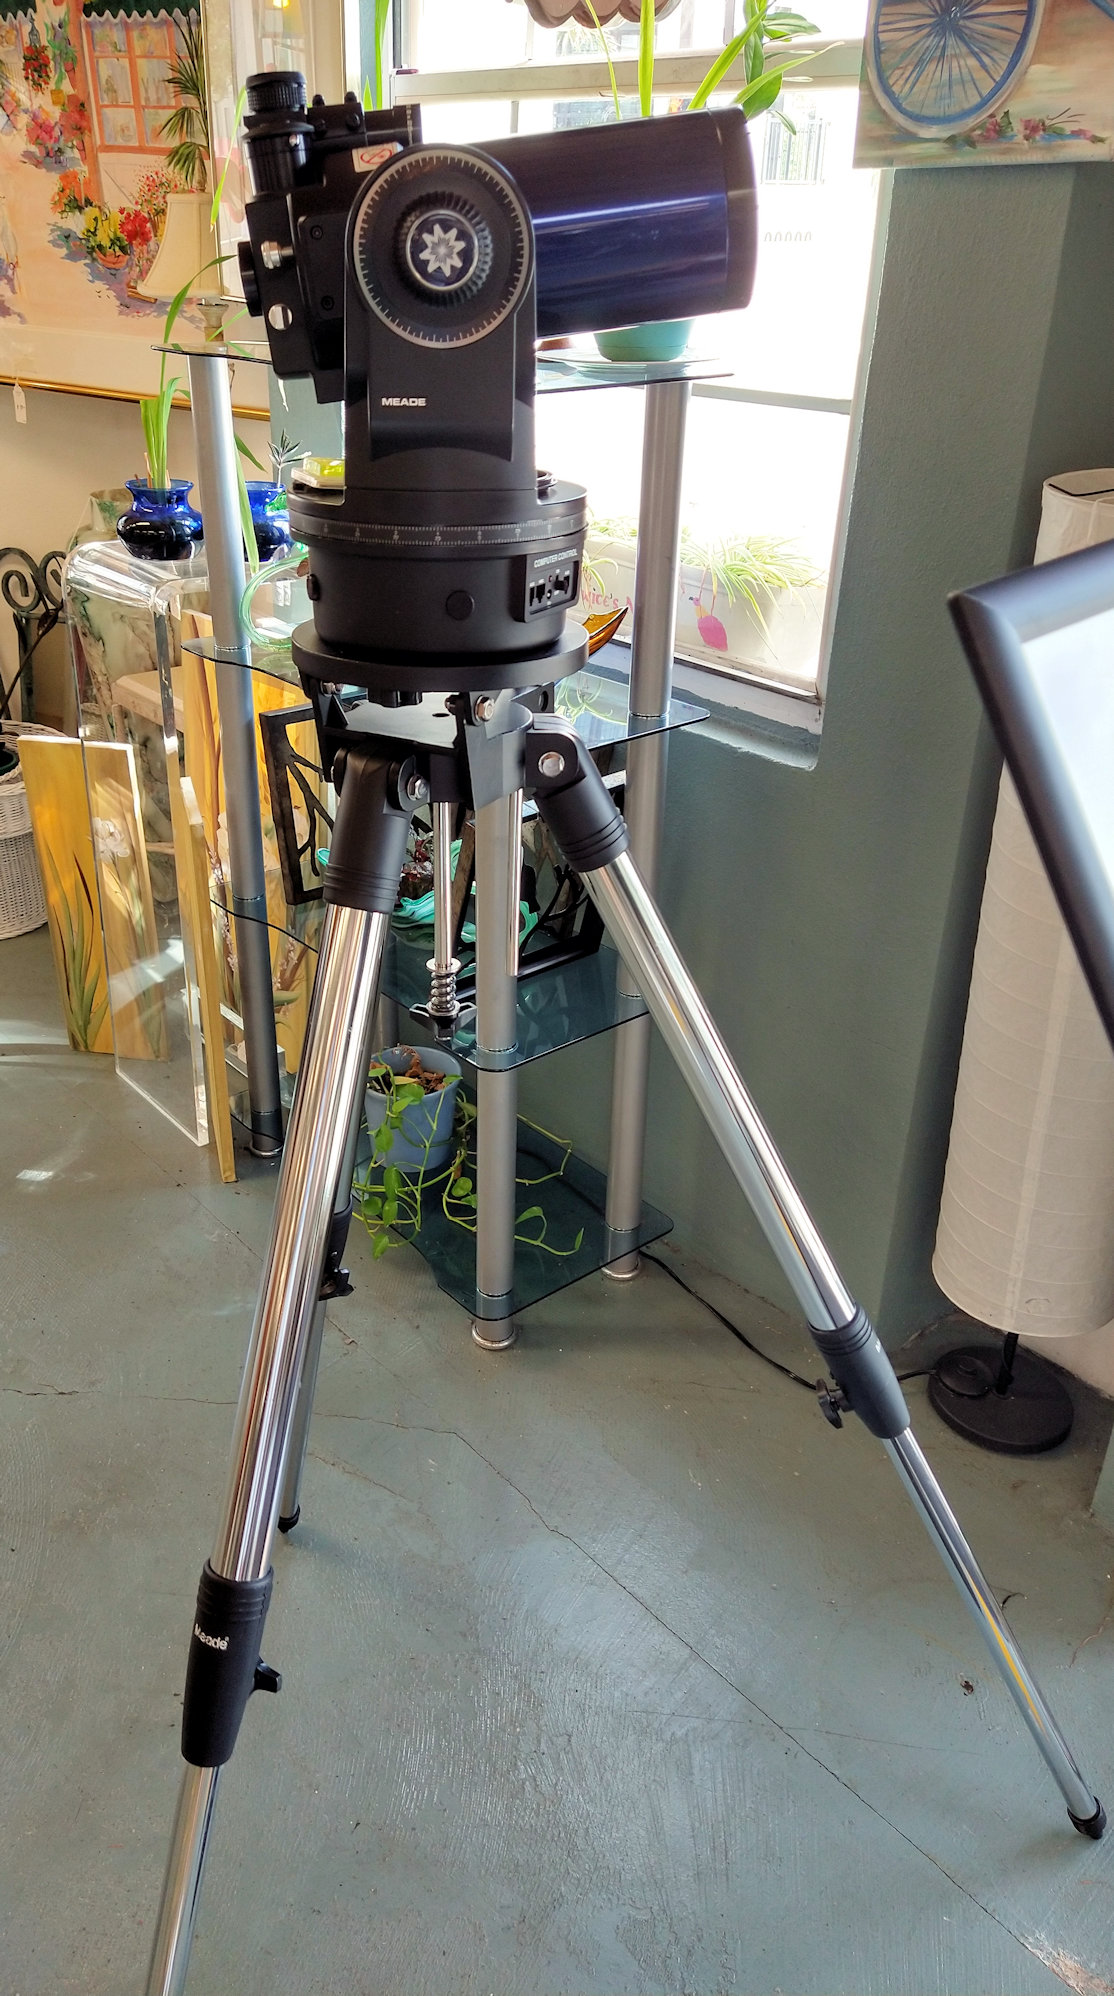 KK0253-Meade-telescope